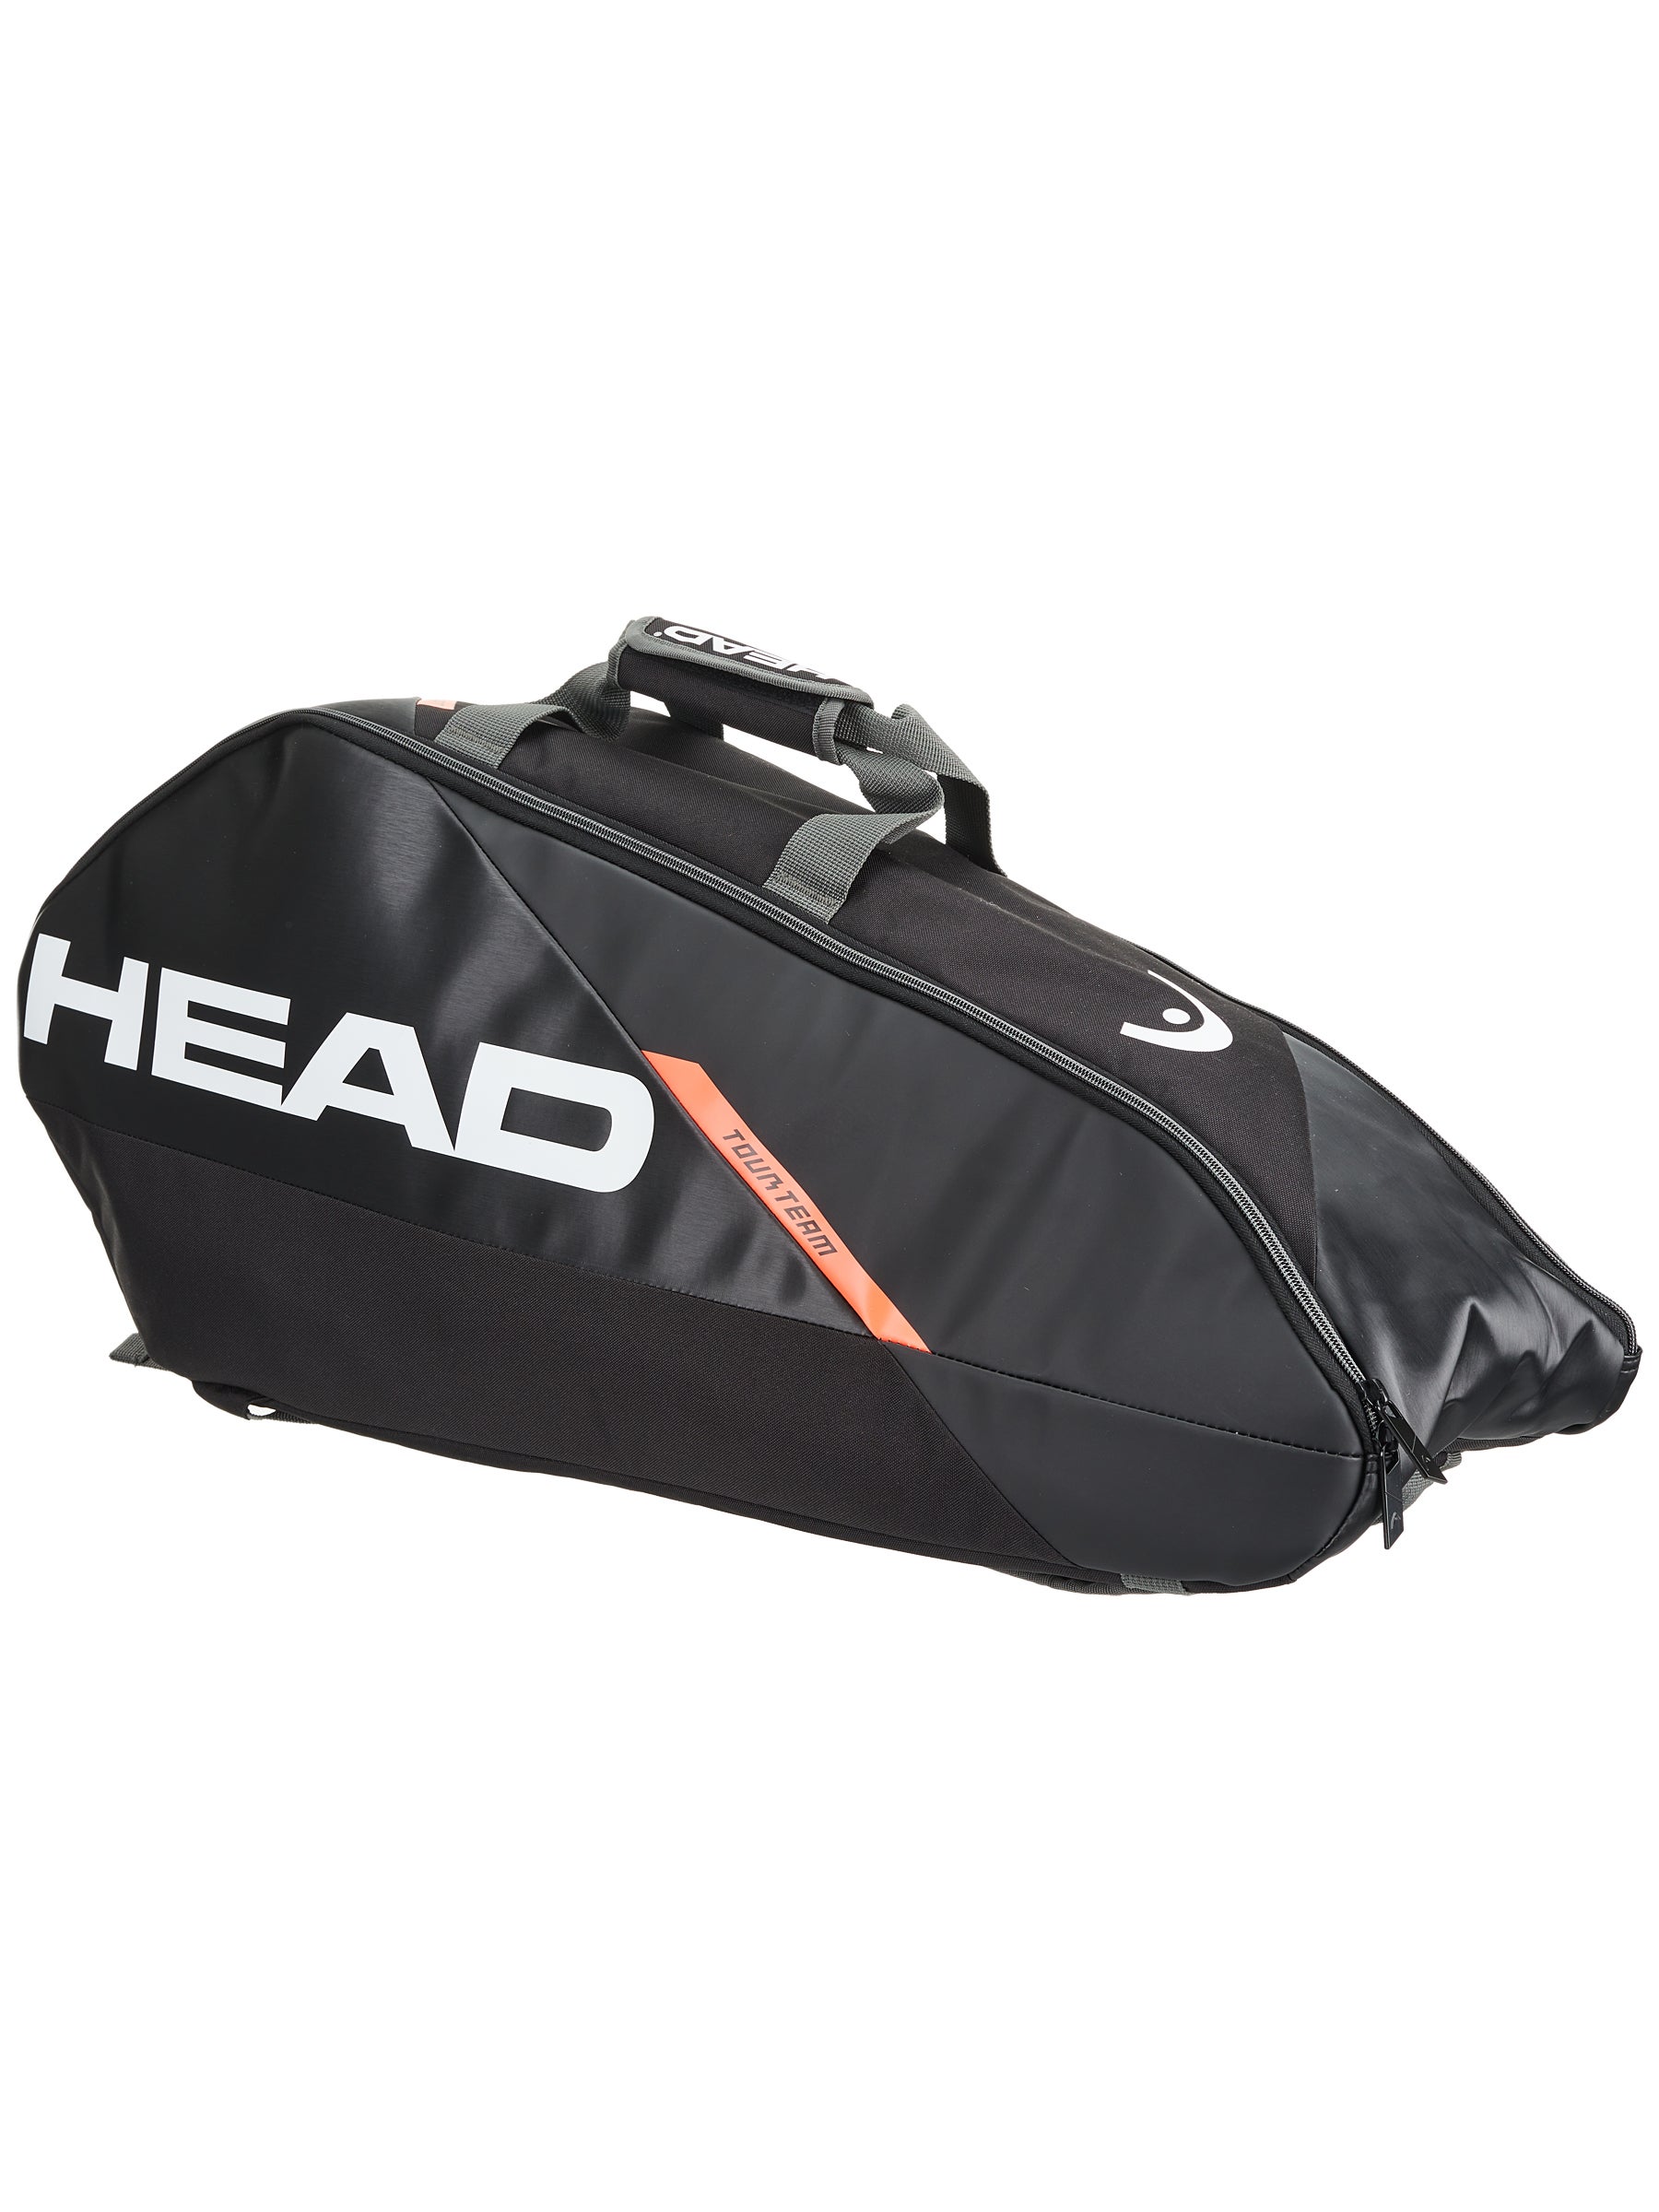 HEAD MXG 6R Combi Tennis Bag Black Silver Racquet  Backpack 2 Packs NWT 283728 